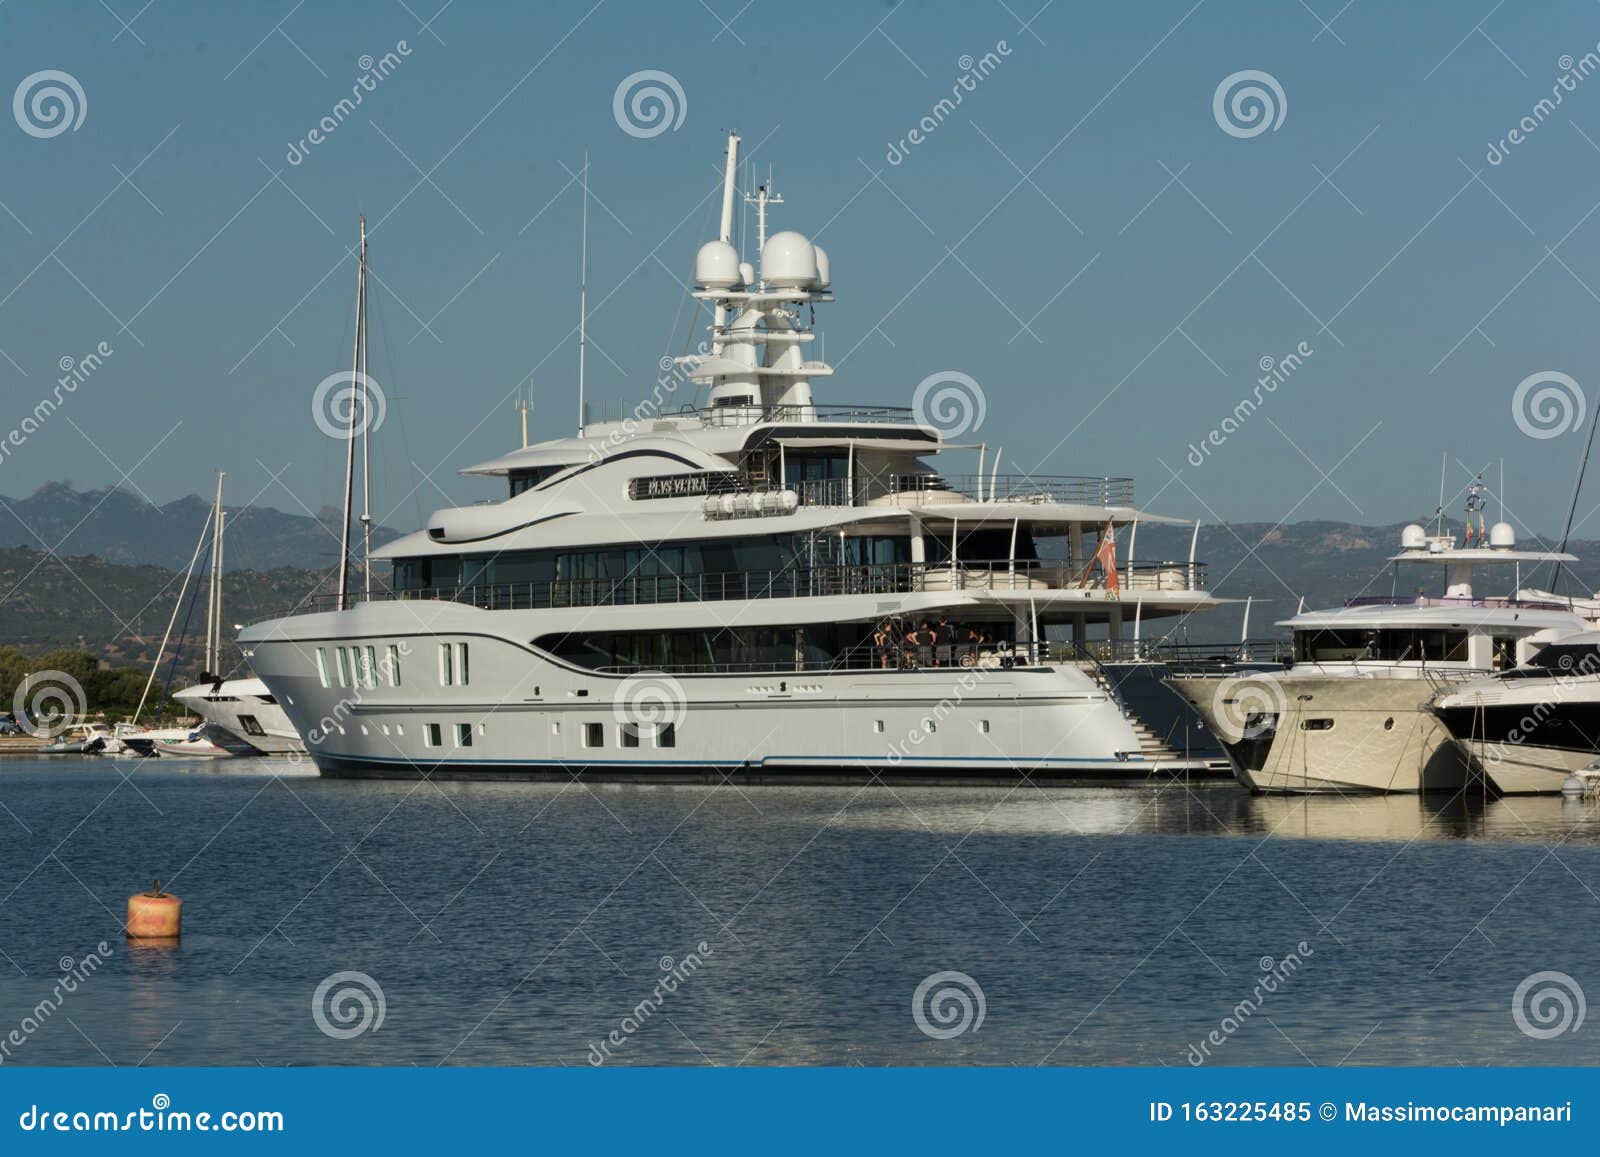 yacht in olbia